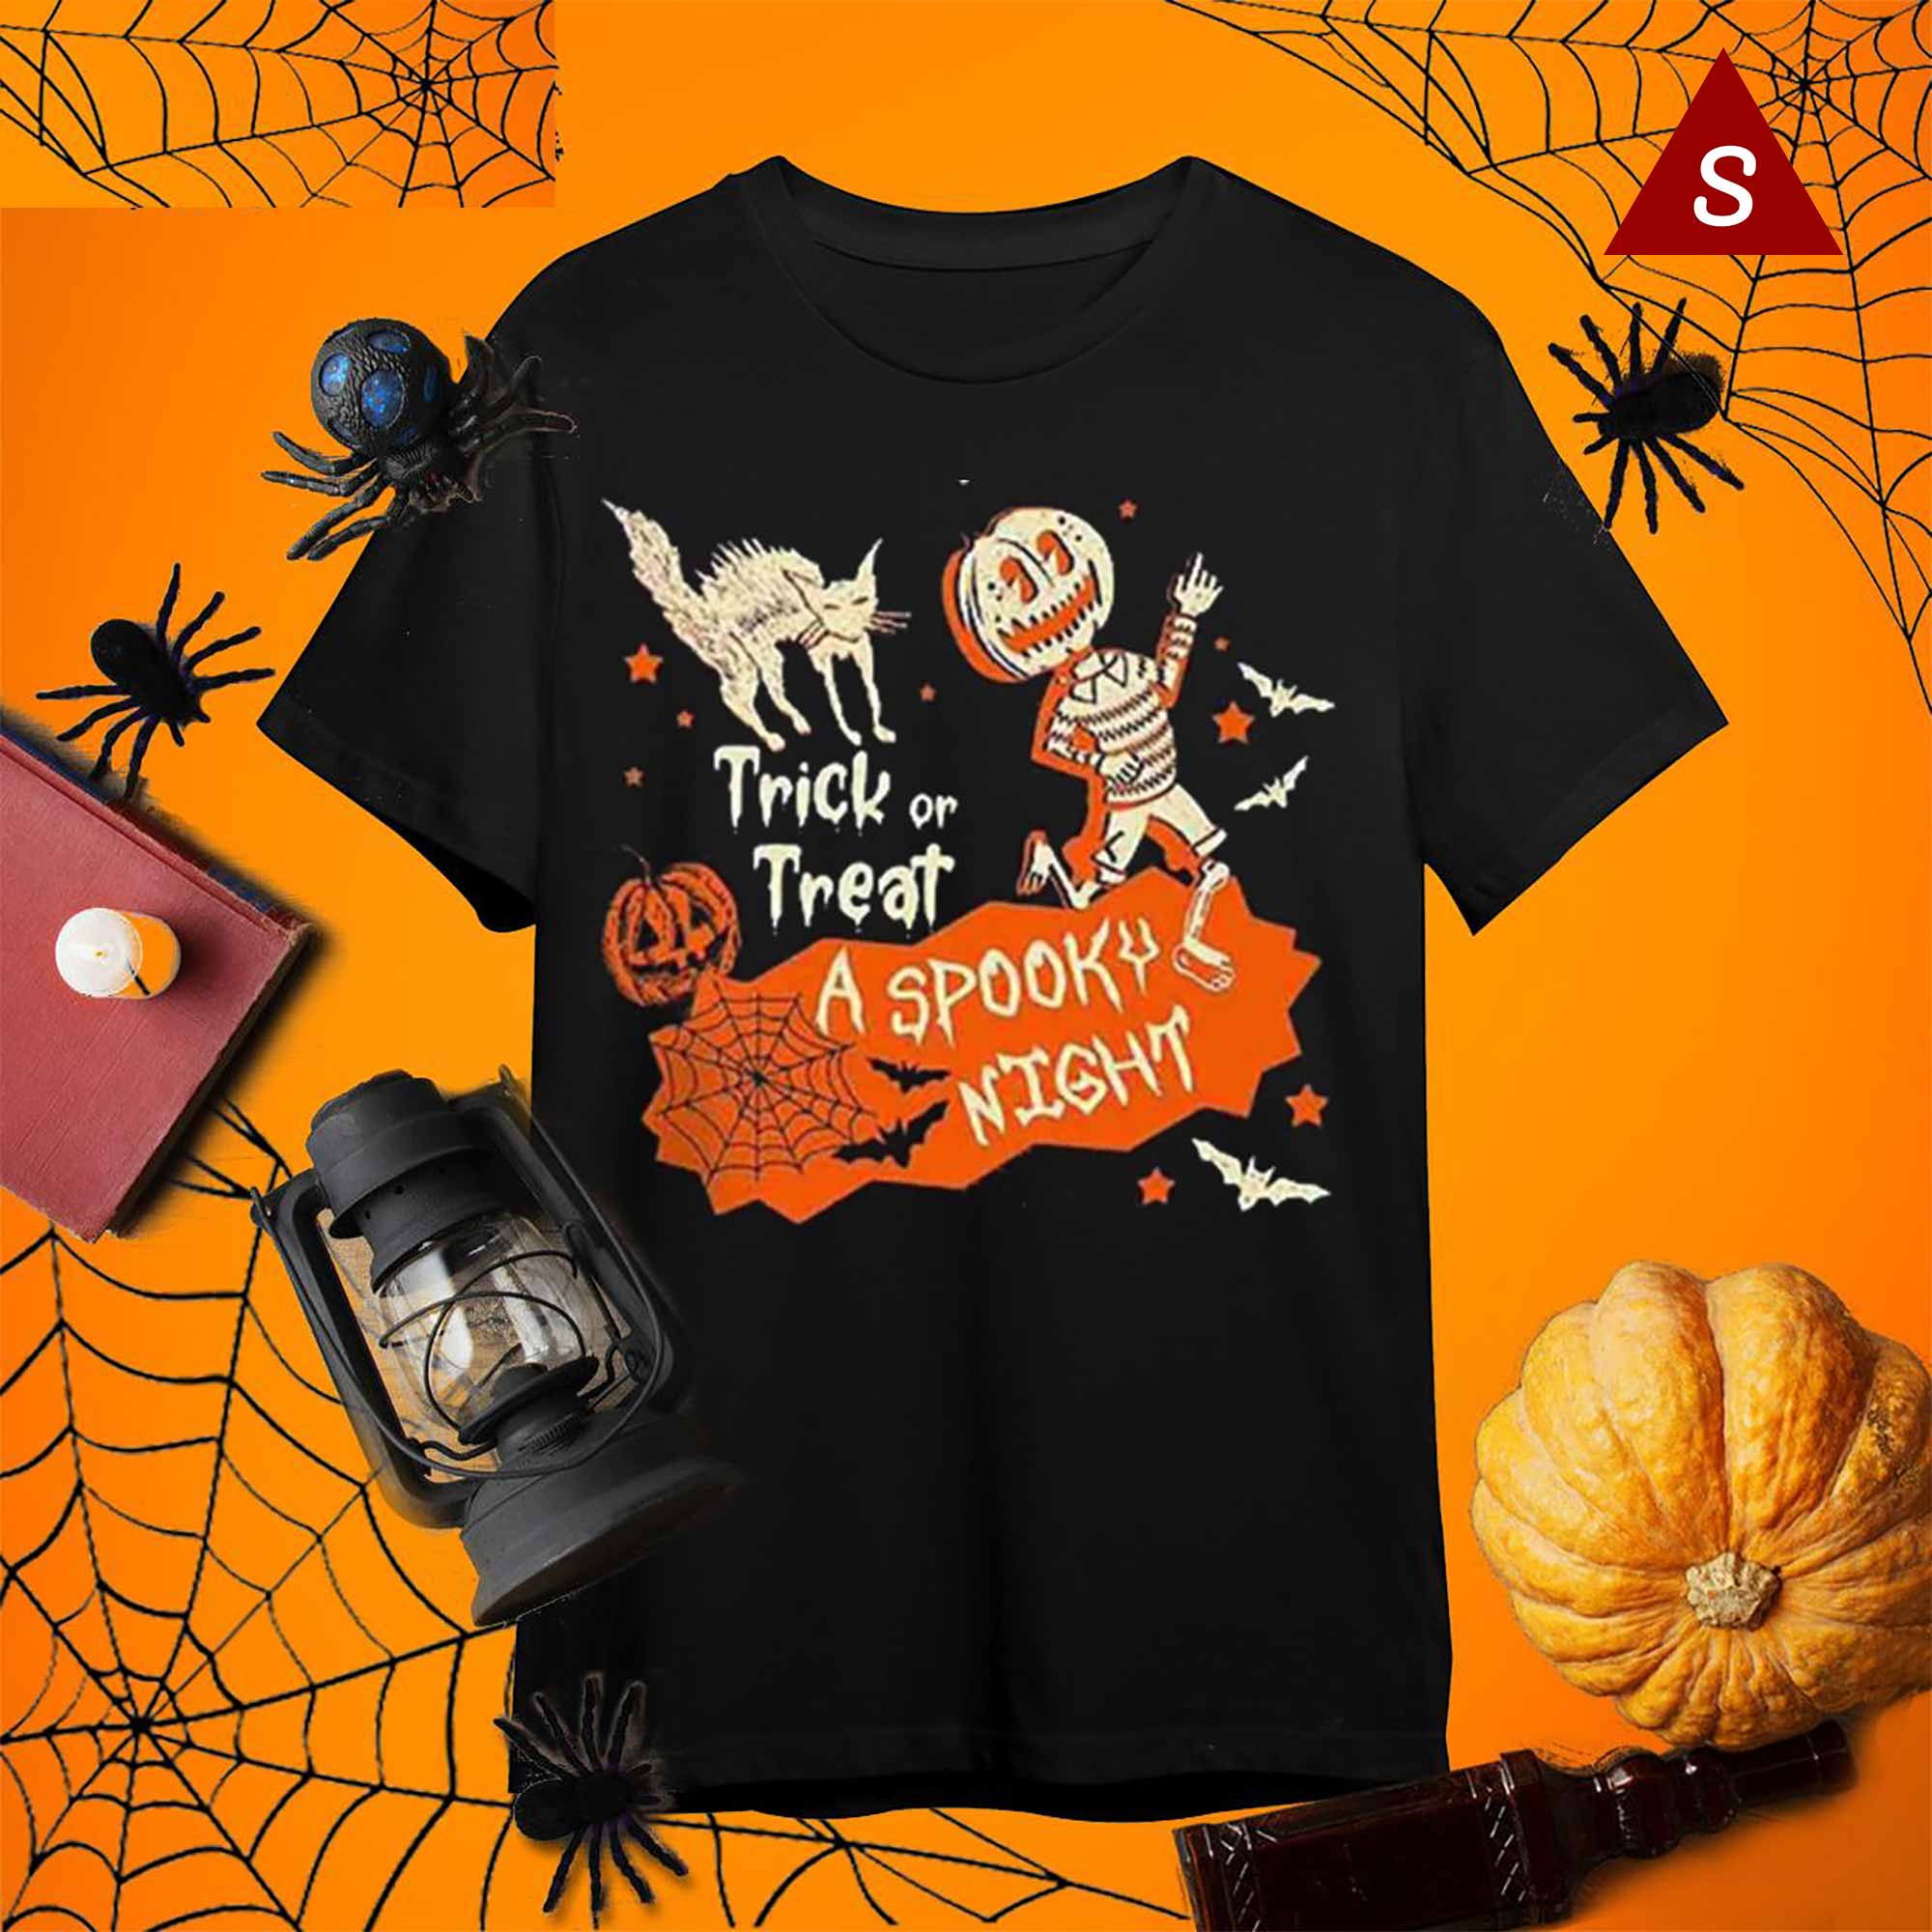 Skitongift Spooky Halloween Halloween Horror Nights Shirts Trick R Treat Skeleton Pumpkin